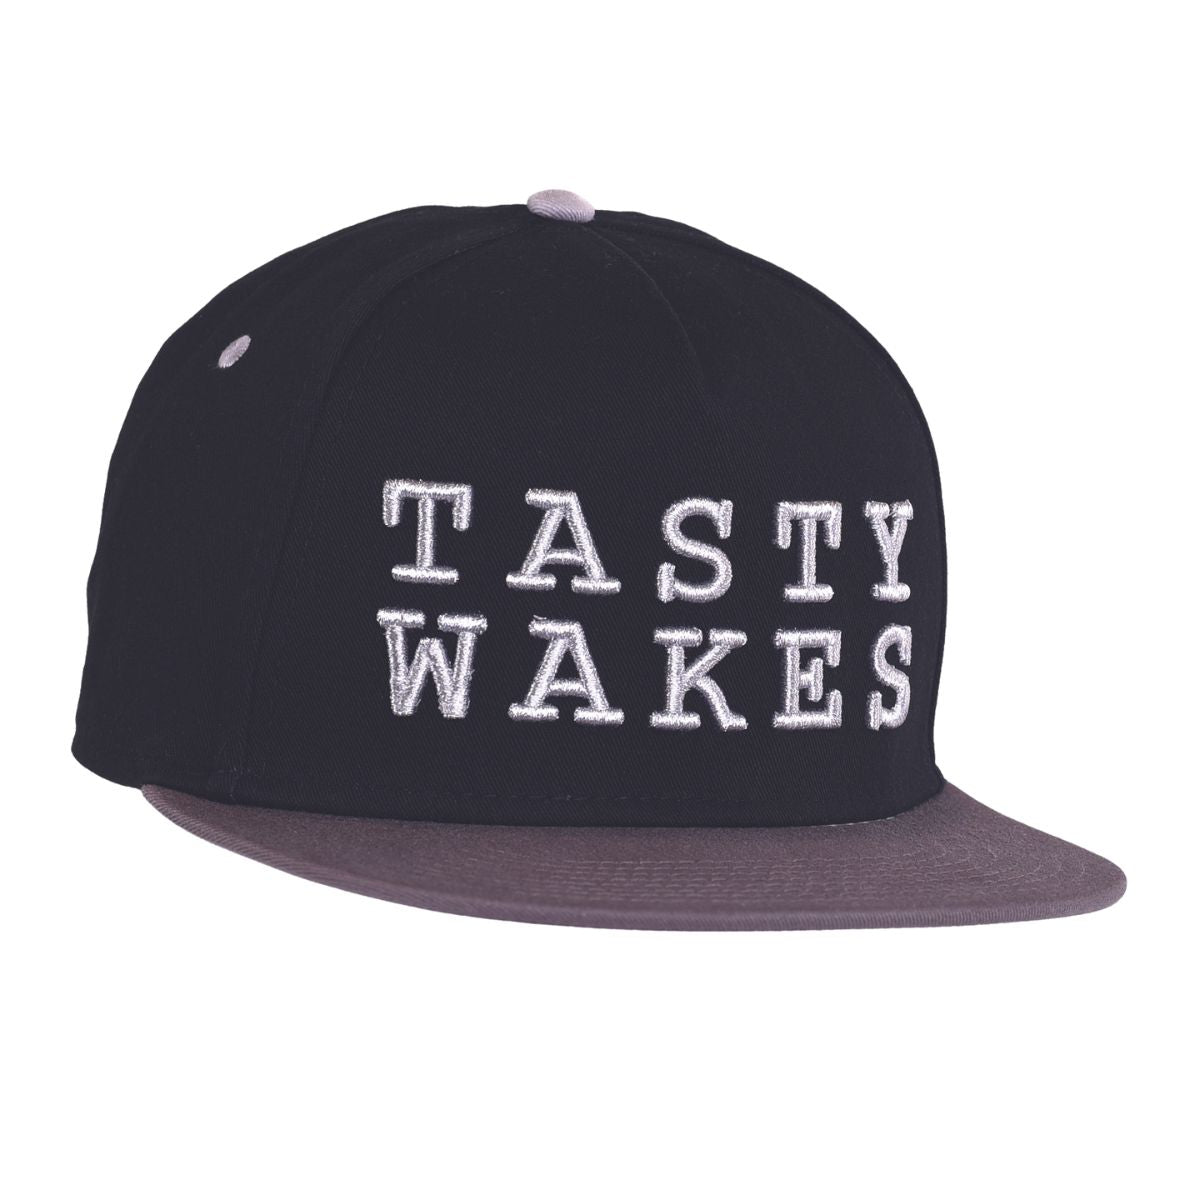 Mission Tasty Wakes Hat in Black - BoardCo